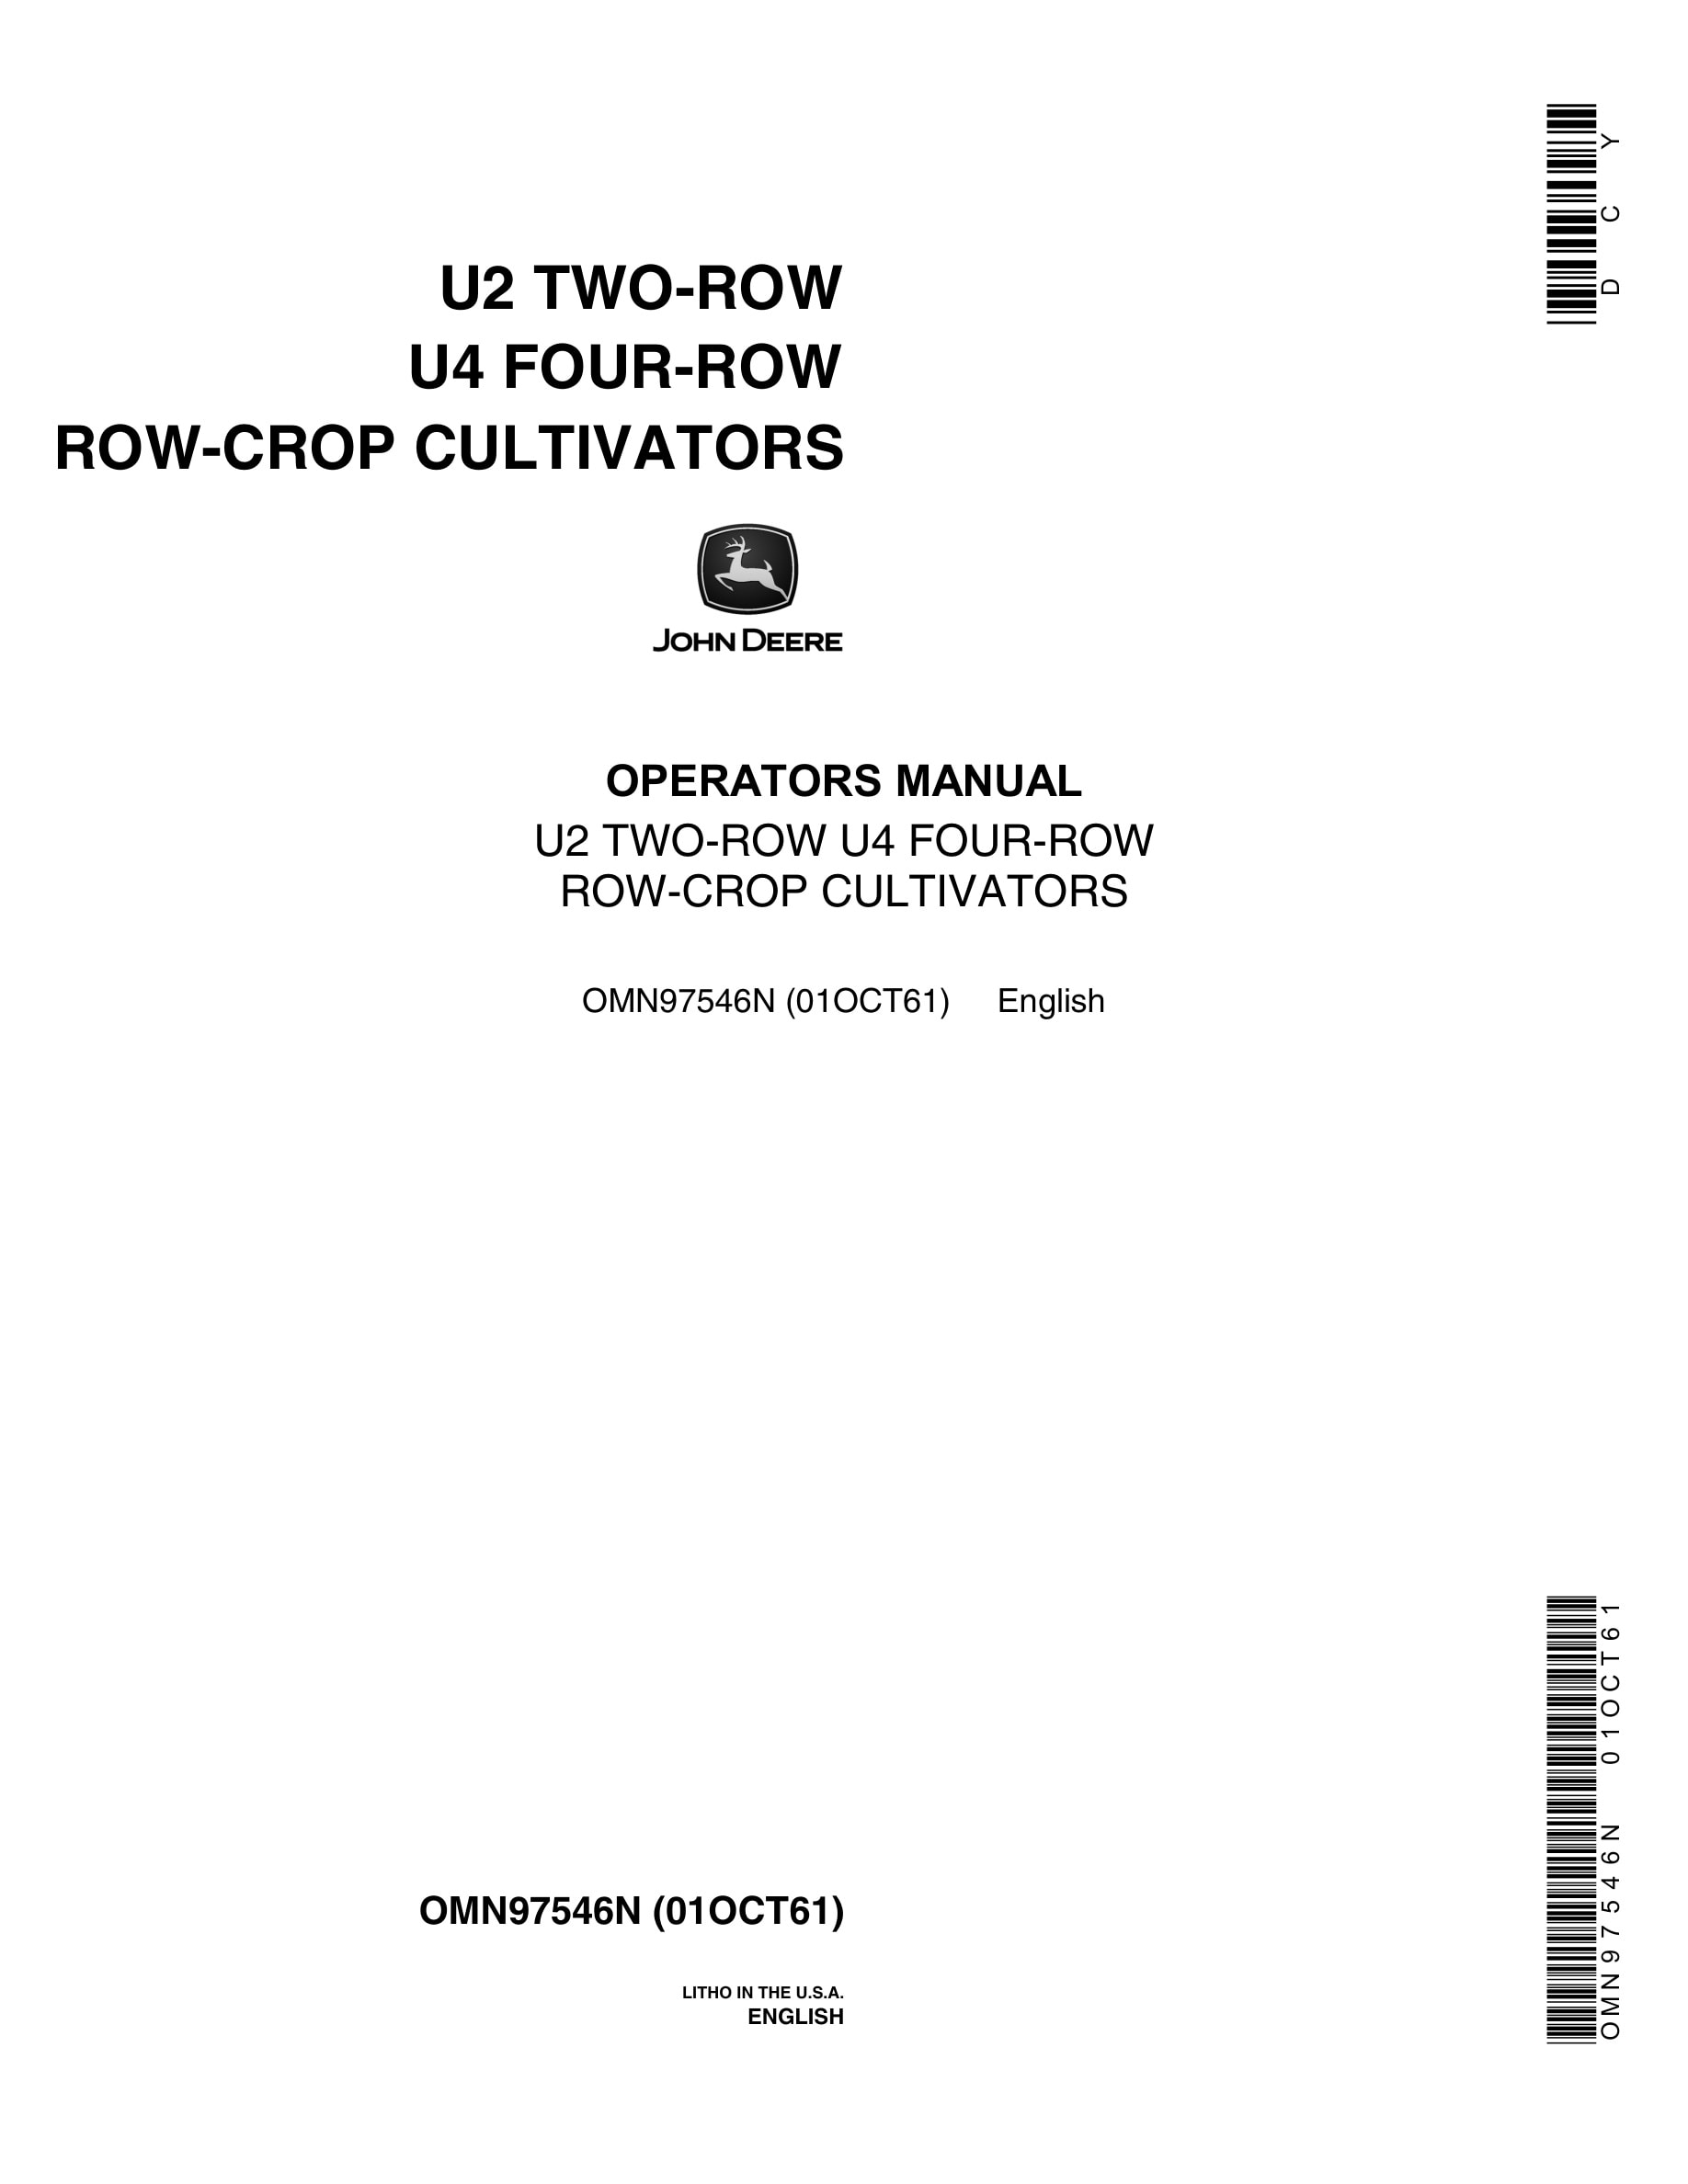 John Deere U2 TWO-ROW U4 FOUR-ROW ROW-CROP CULTIVATOR Operator Manual OMN97546N-1